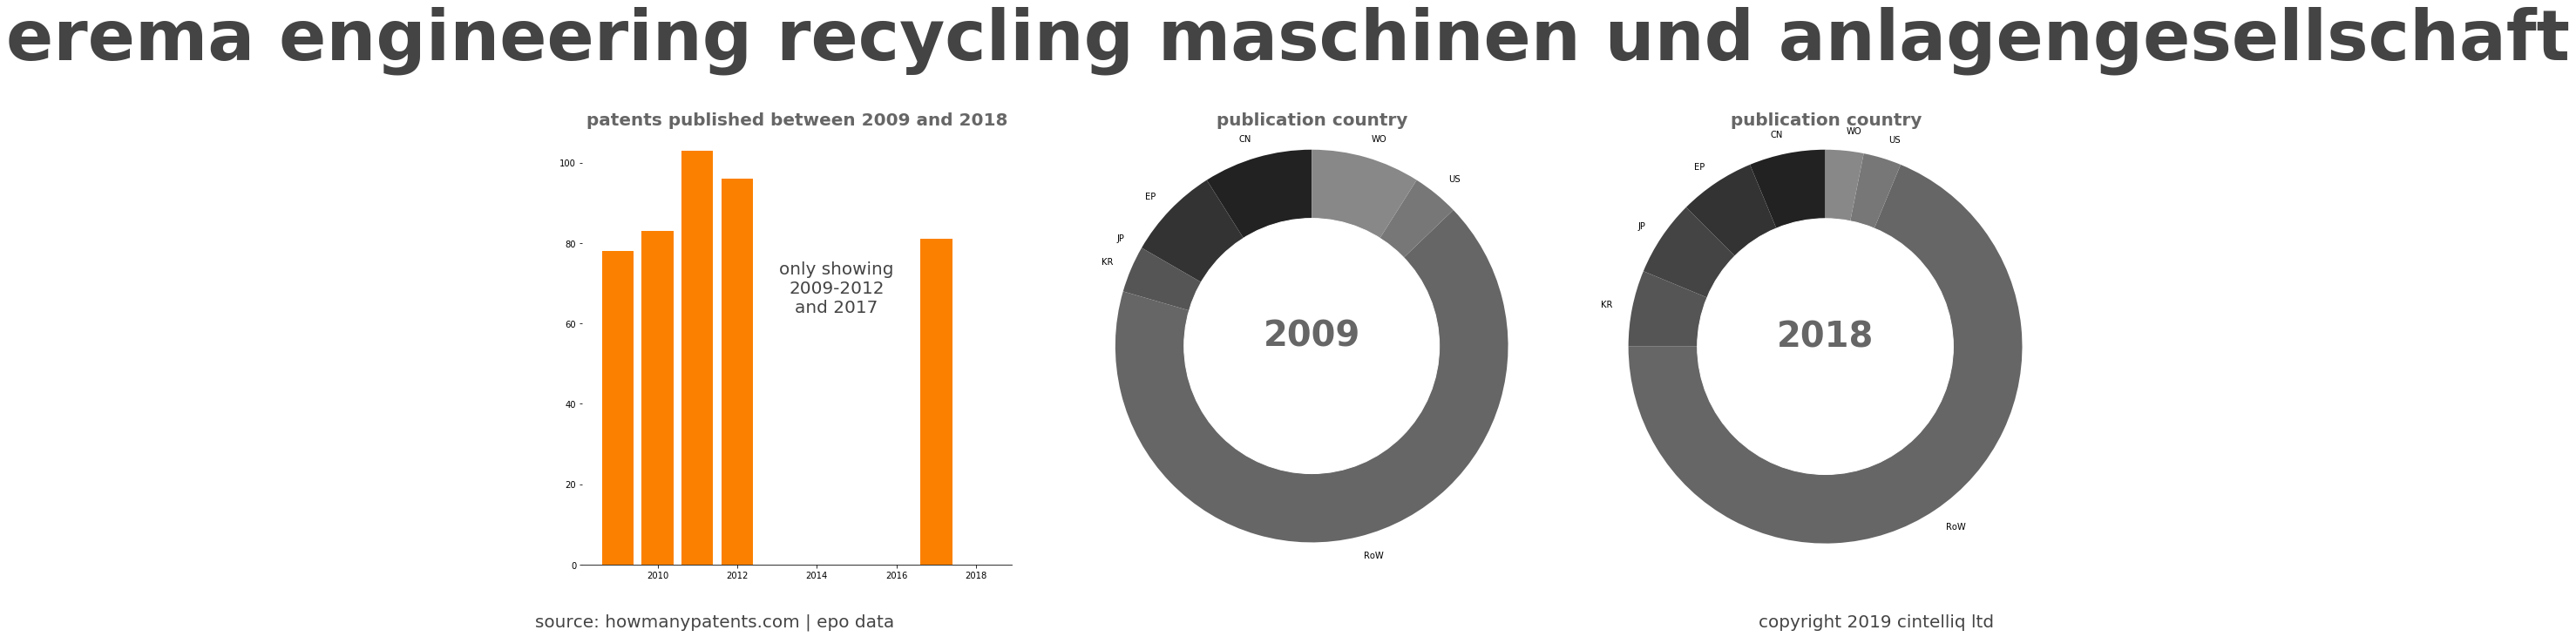 summary of patents for Erema Engineering Recycling Maschinen Und Anlagengesellschaft